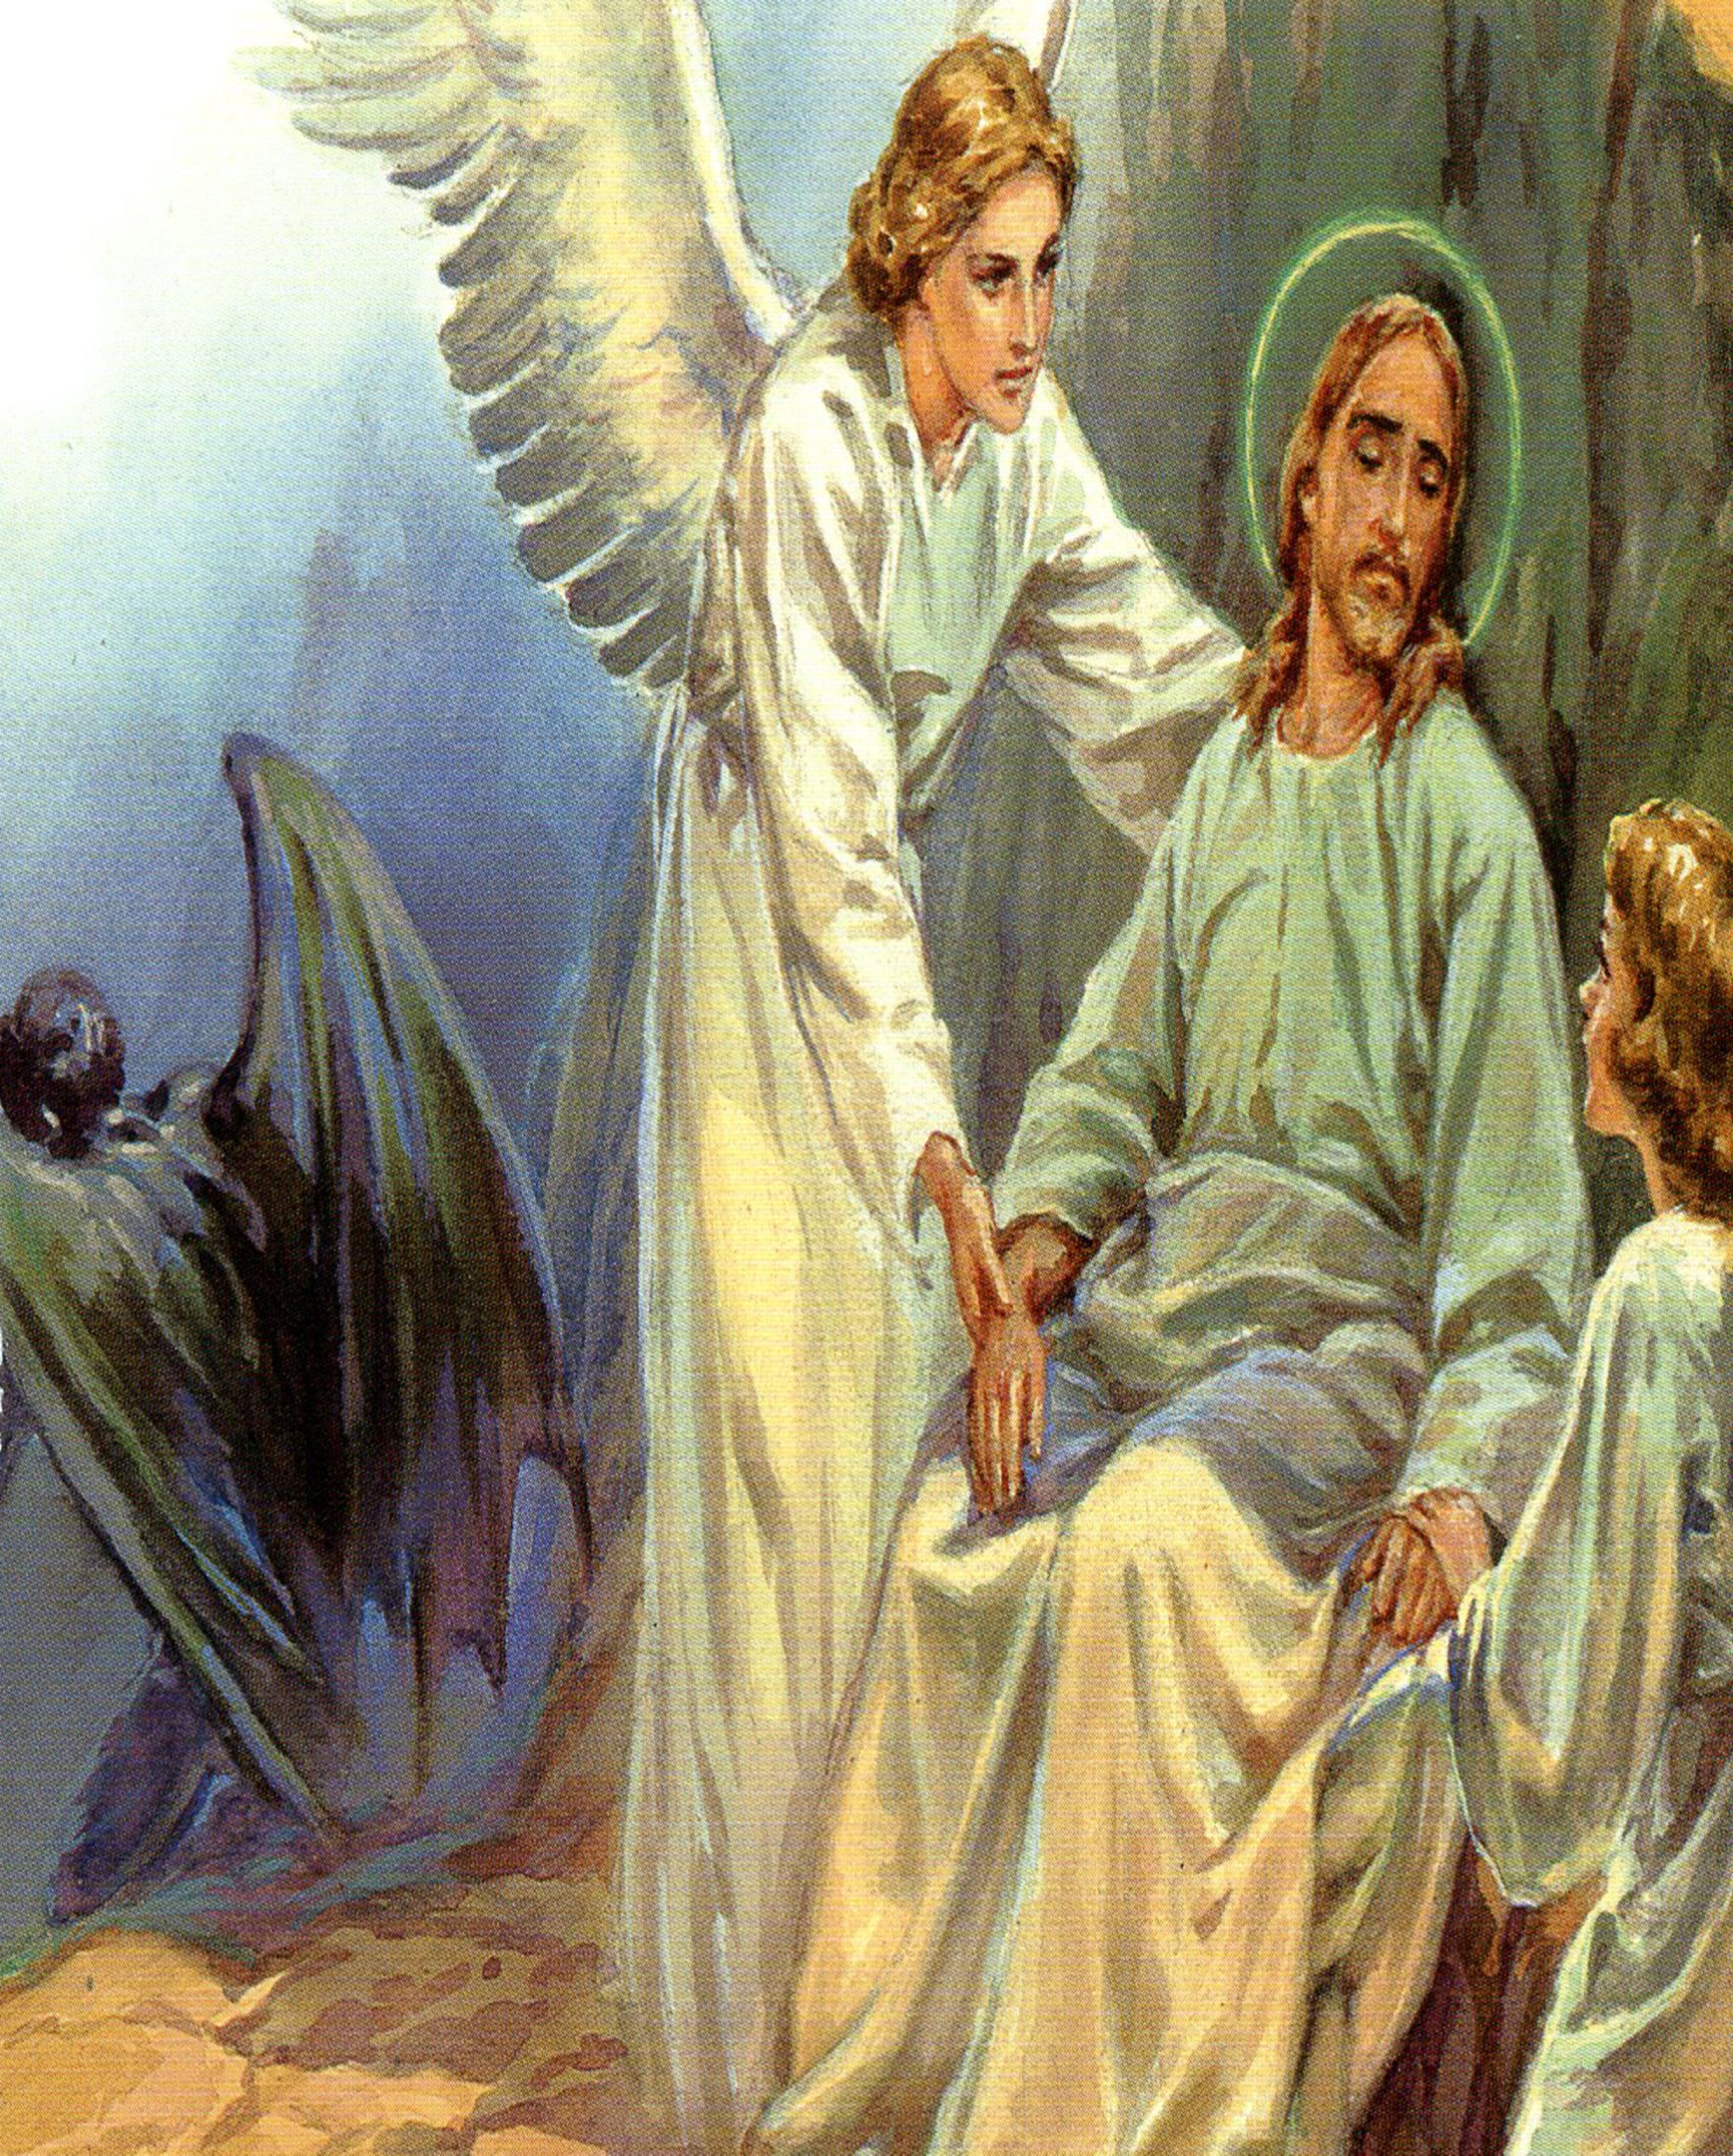 Angel serve Jesus N - CATHOLIC PRINTS PICTURES - Catholic Pictures